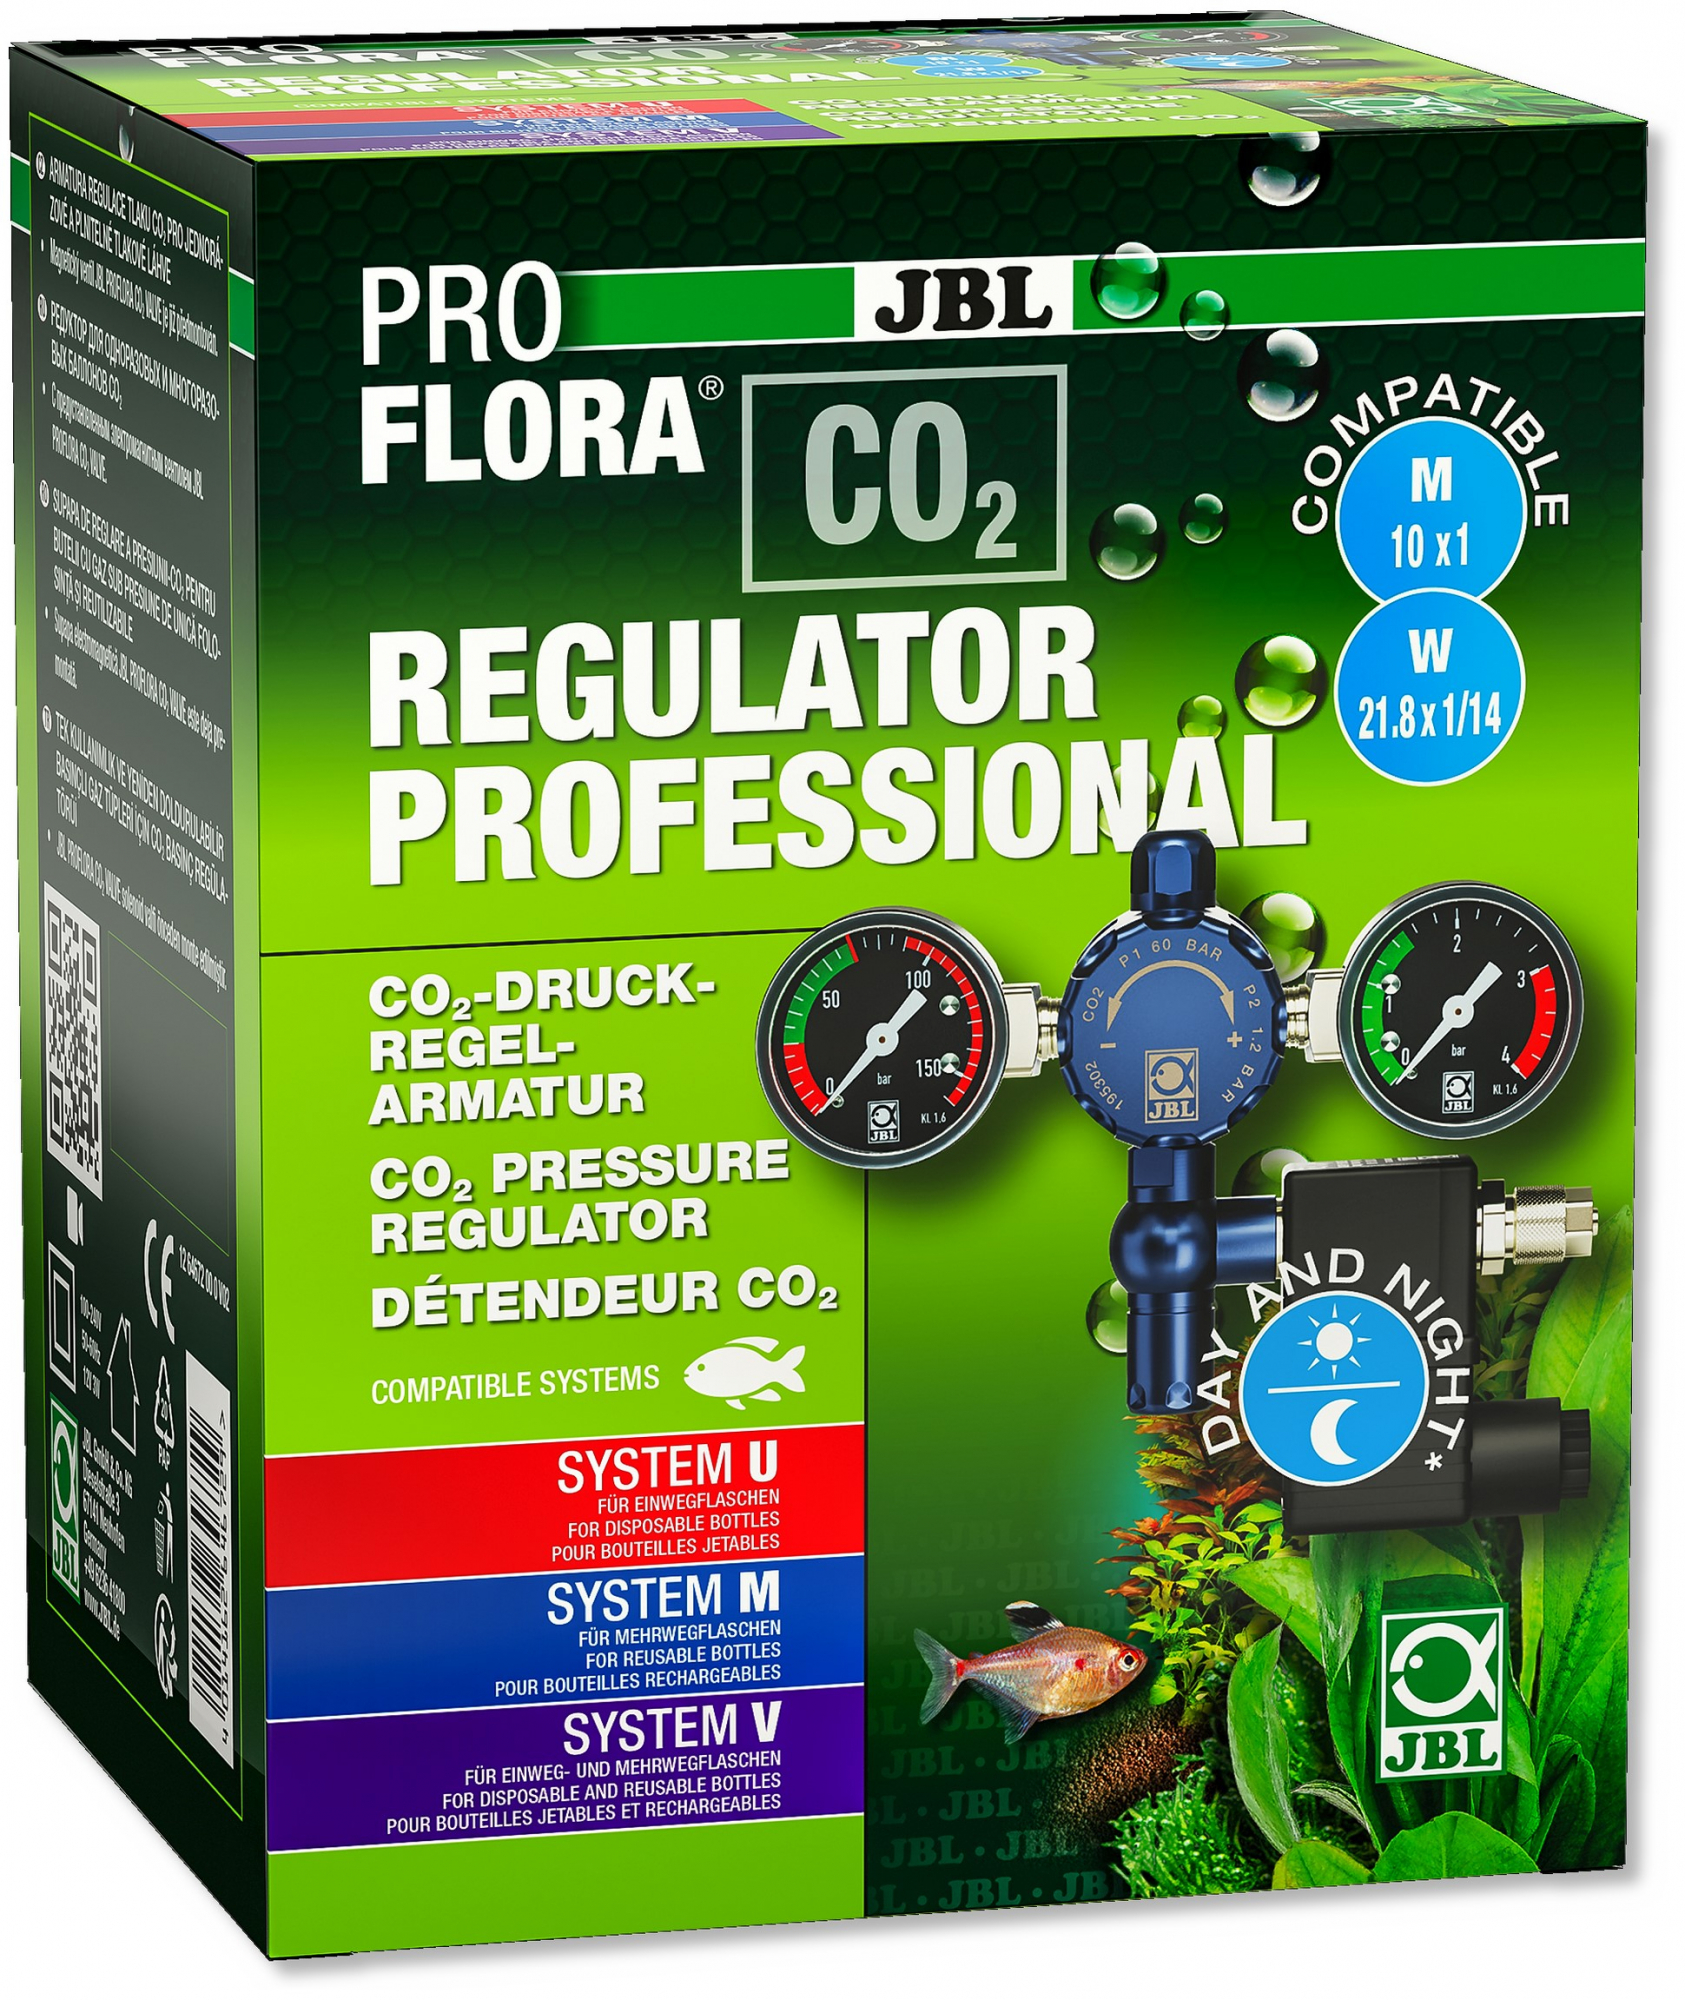 JBL Proflora Regulator Professional Regolatore di pressione per sistema di fertilizzazione CO2